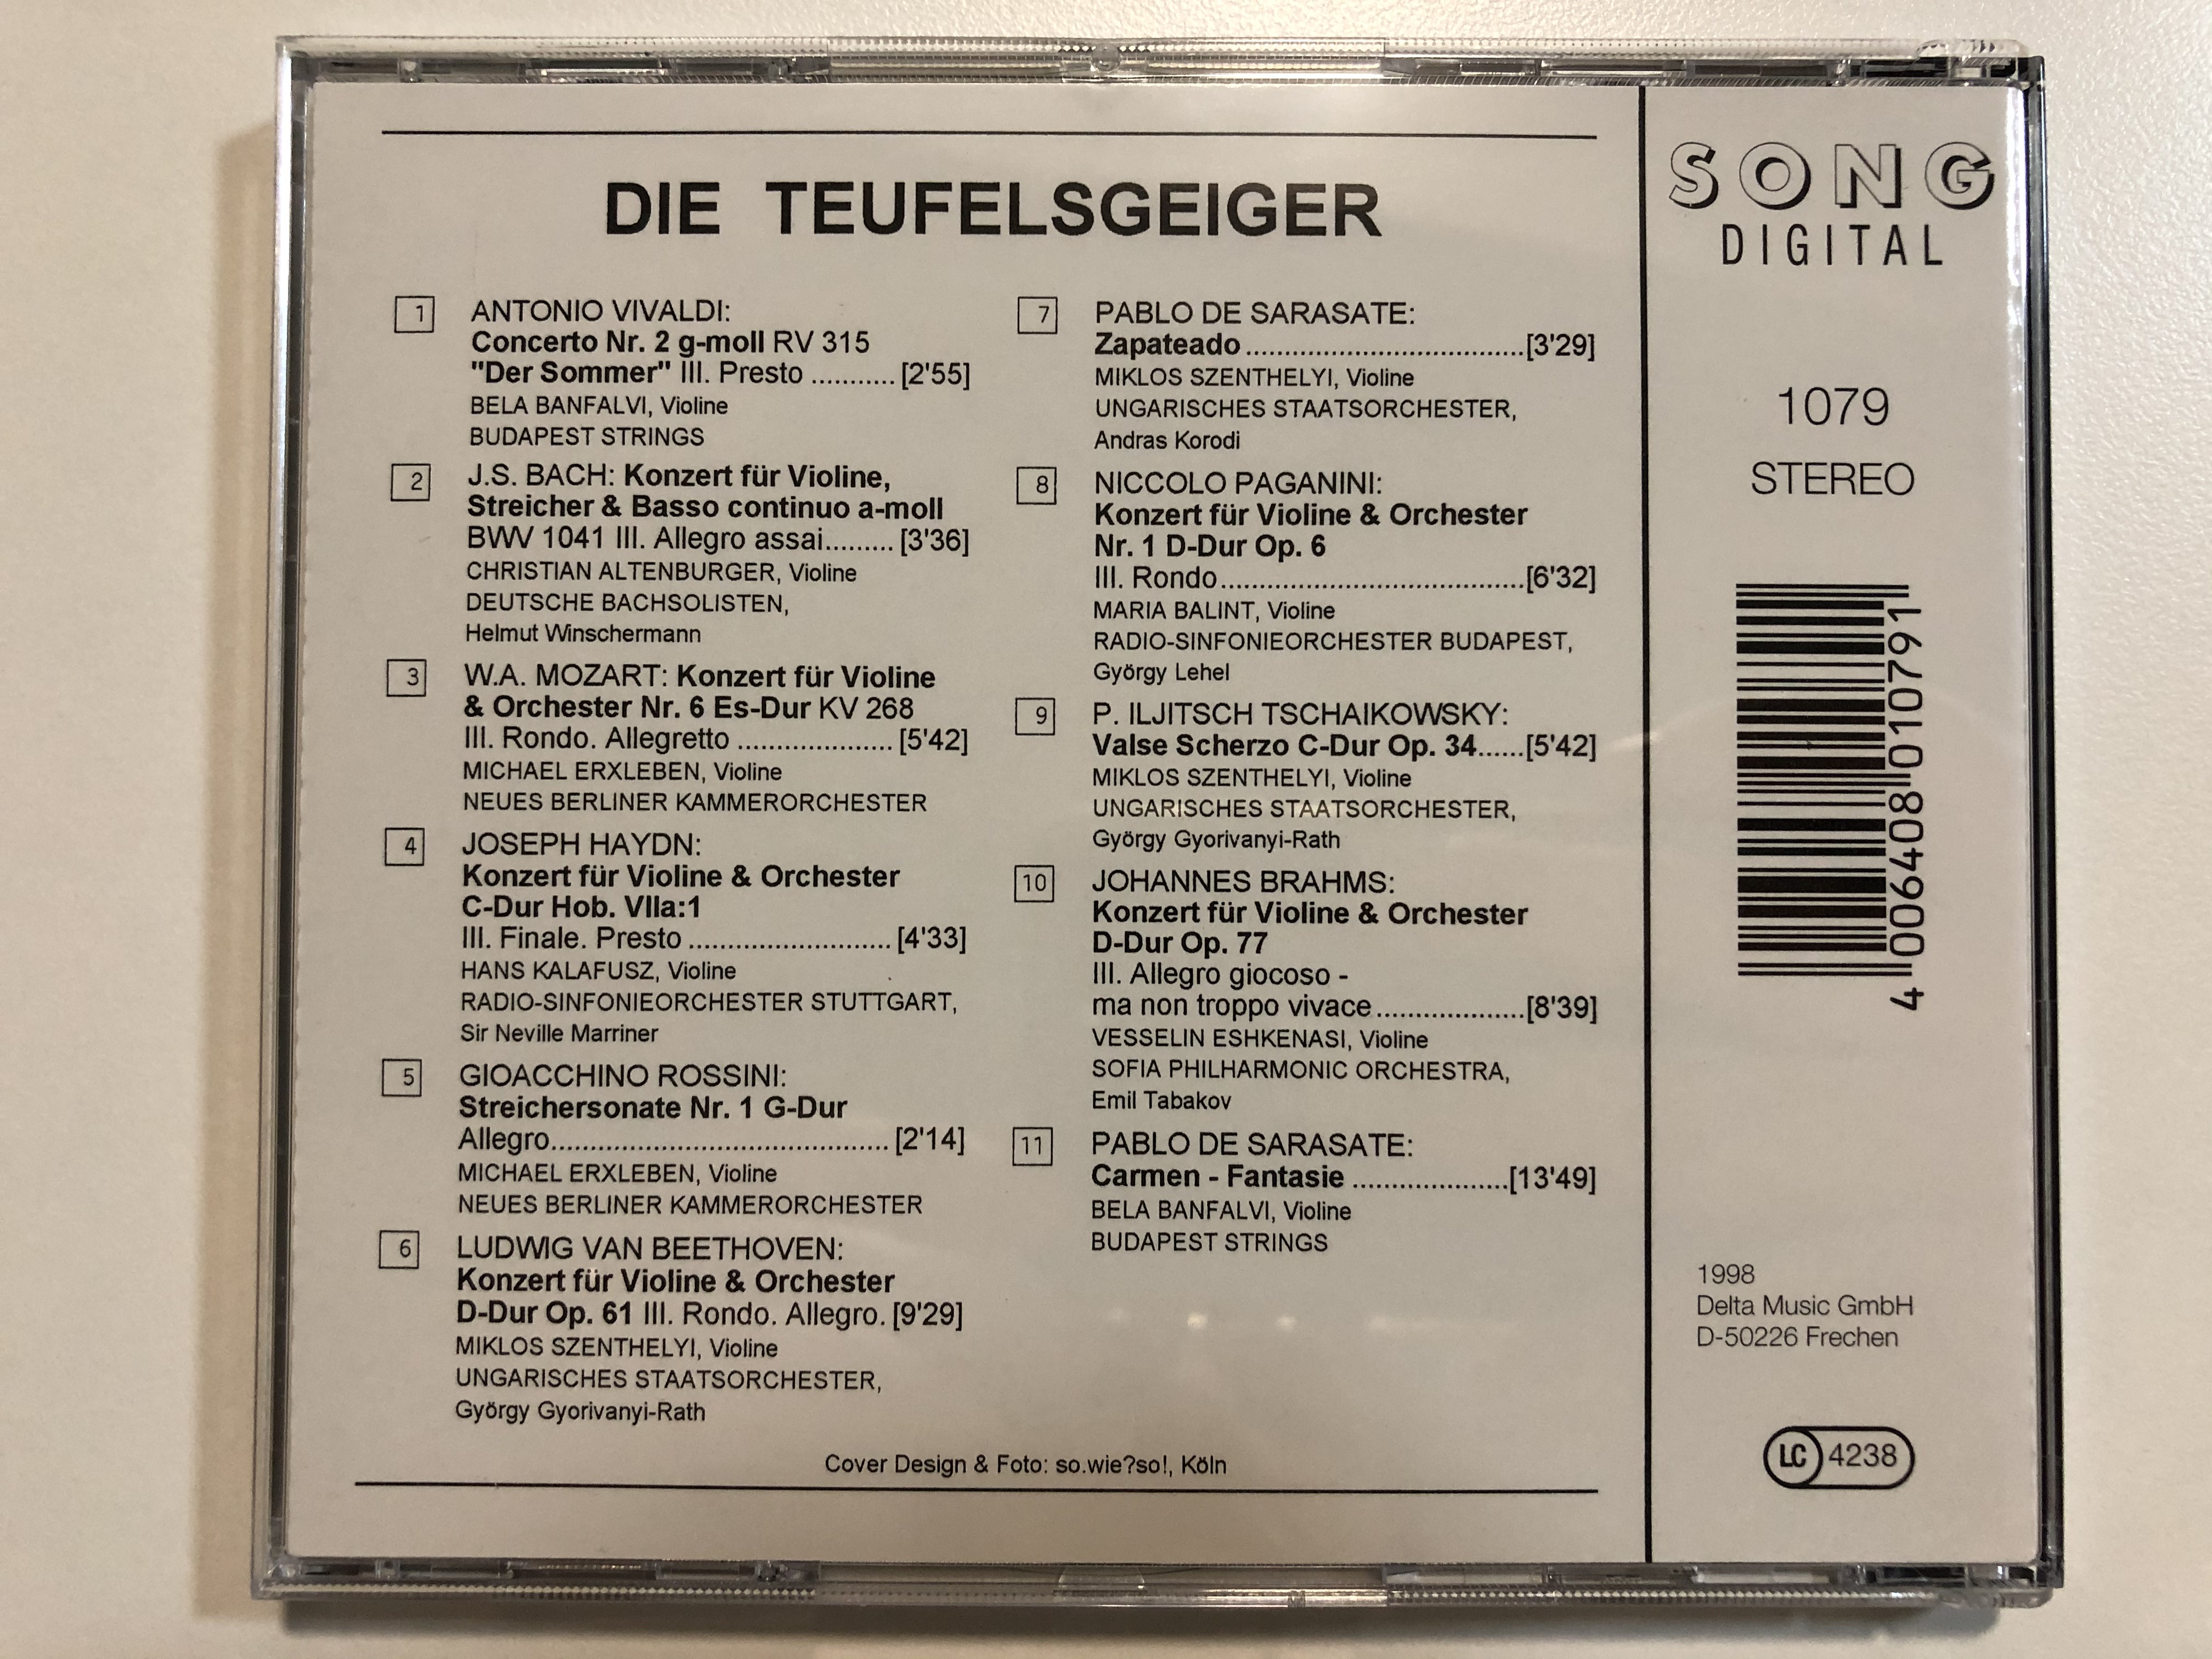 die-teufelsgeiger-virtuose-violine-michael-erxleben-christian-altenburger-hans-kalafusz.-bela-banfalvi-miklos-szenthelyi-...-song-digital-audio-cd-1998-stereo-1079-5-.jpg